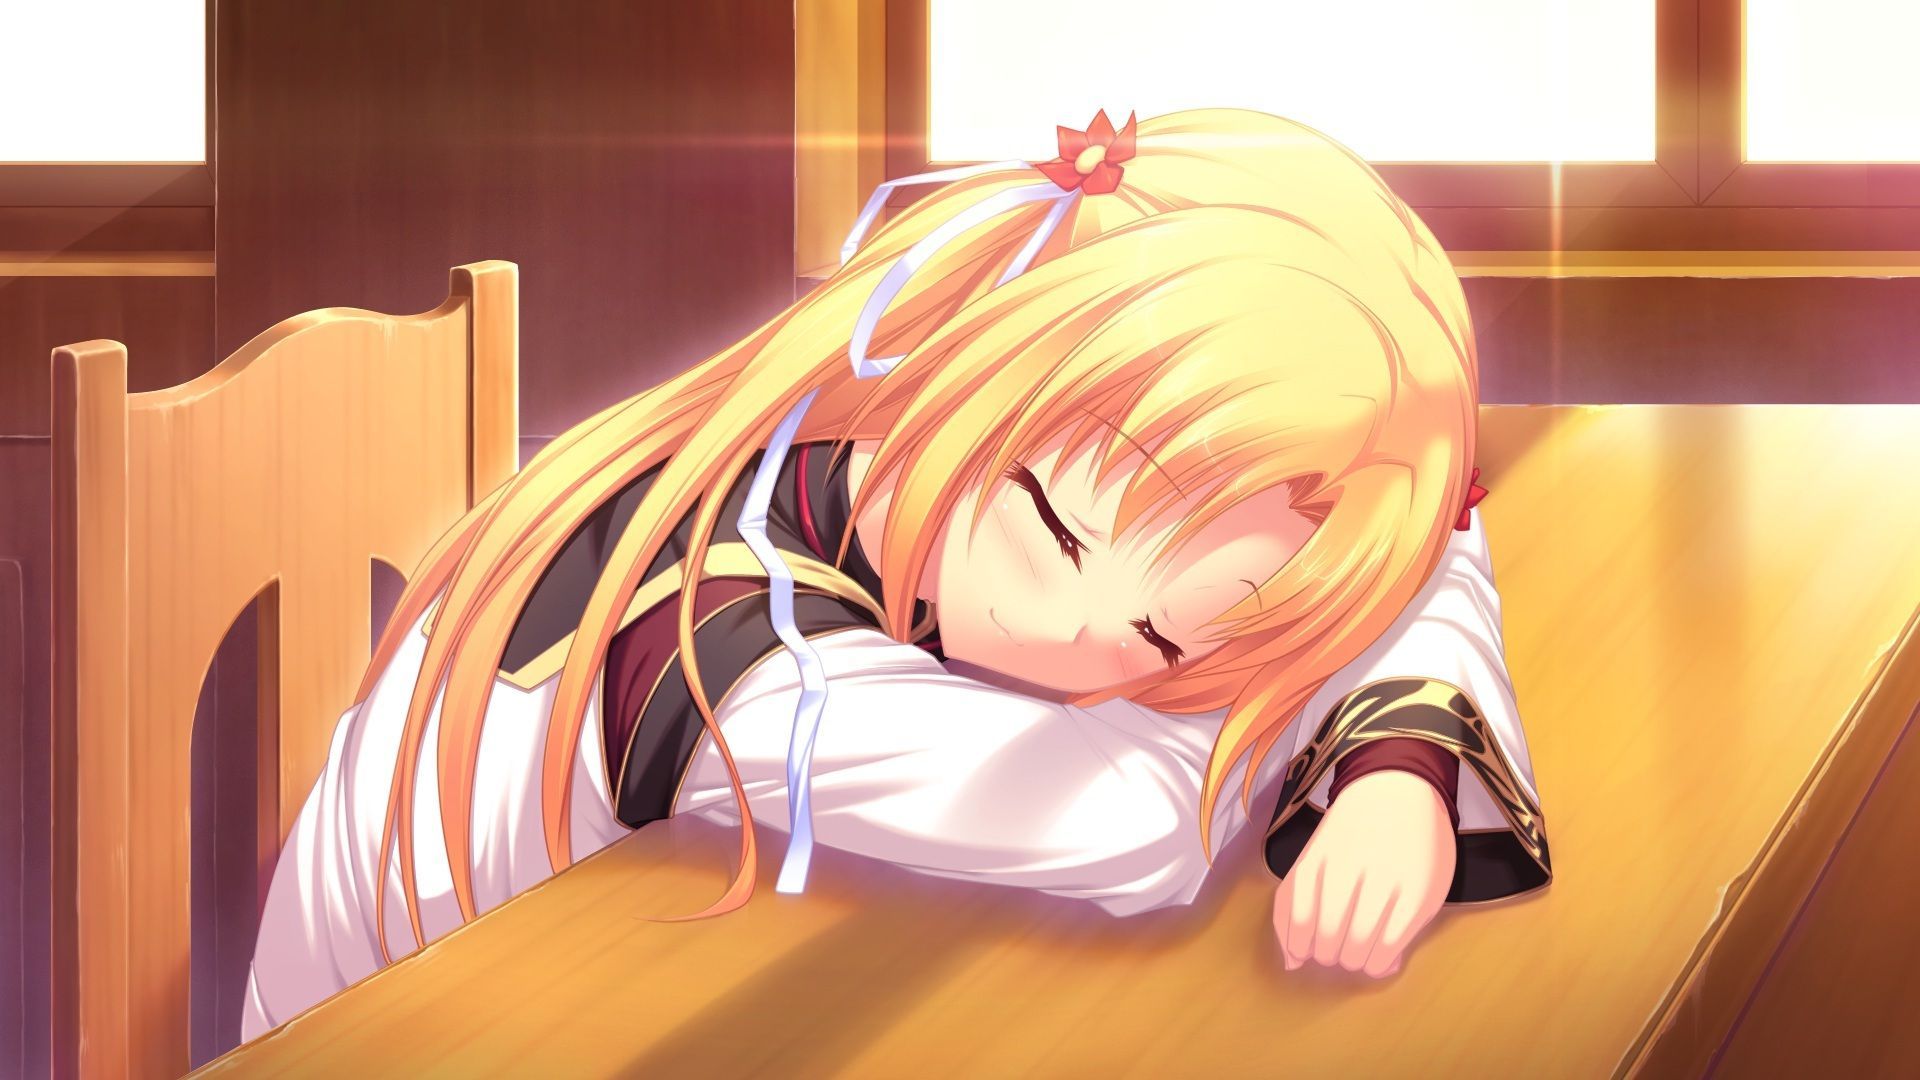 Amazing Girl Sleeping. HD Anime Wallpaper for Mobile and Desktop